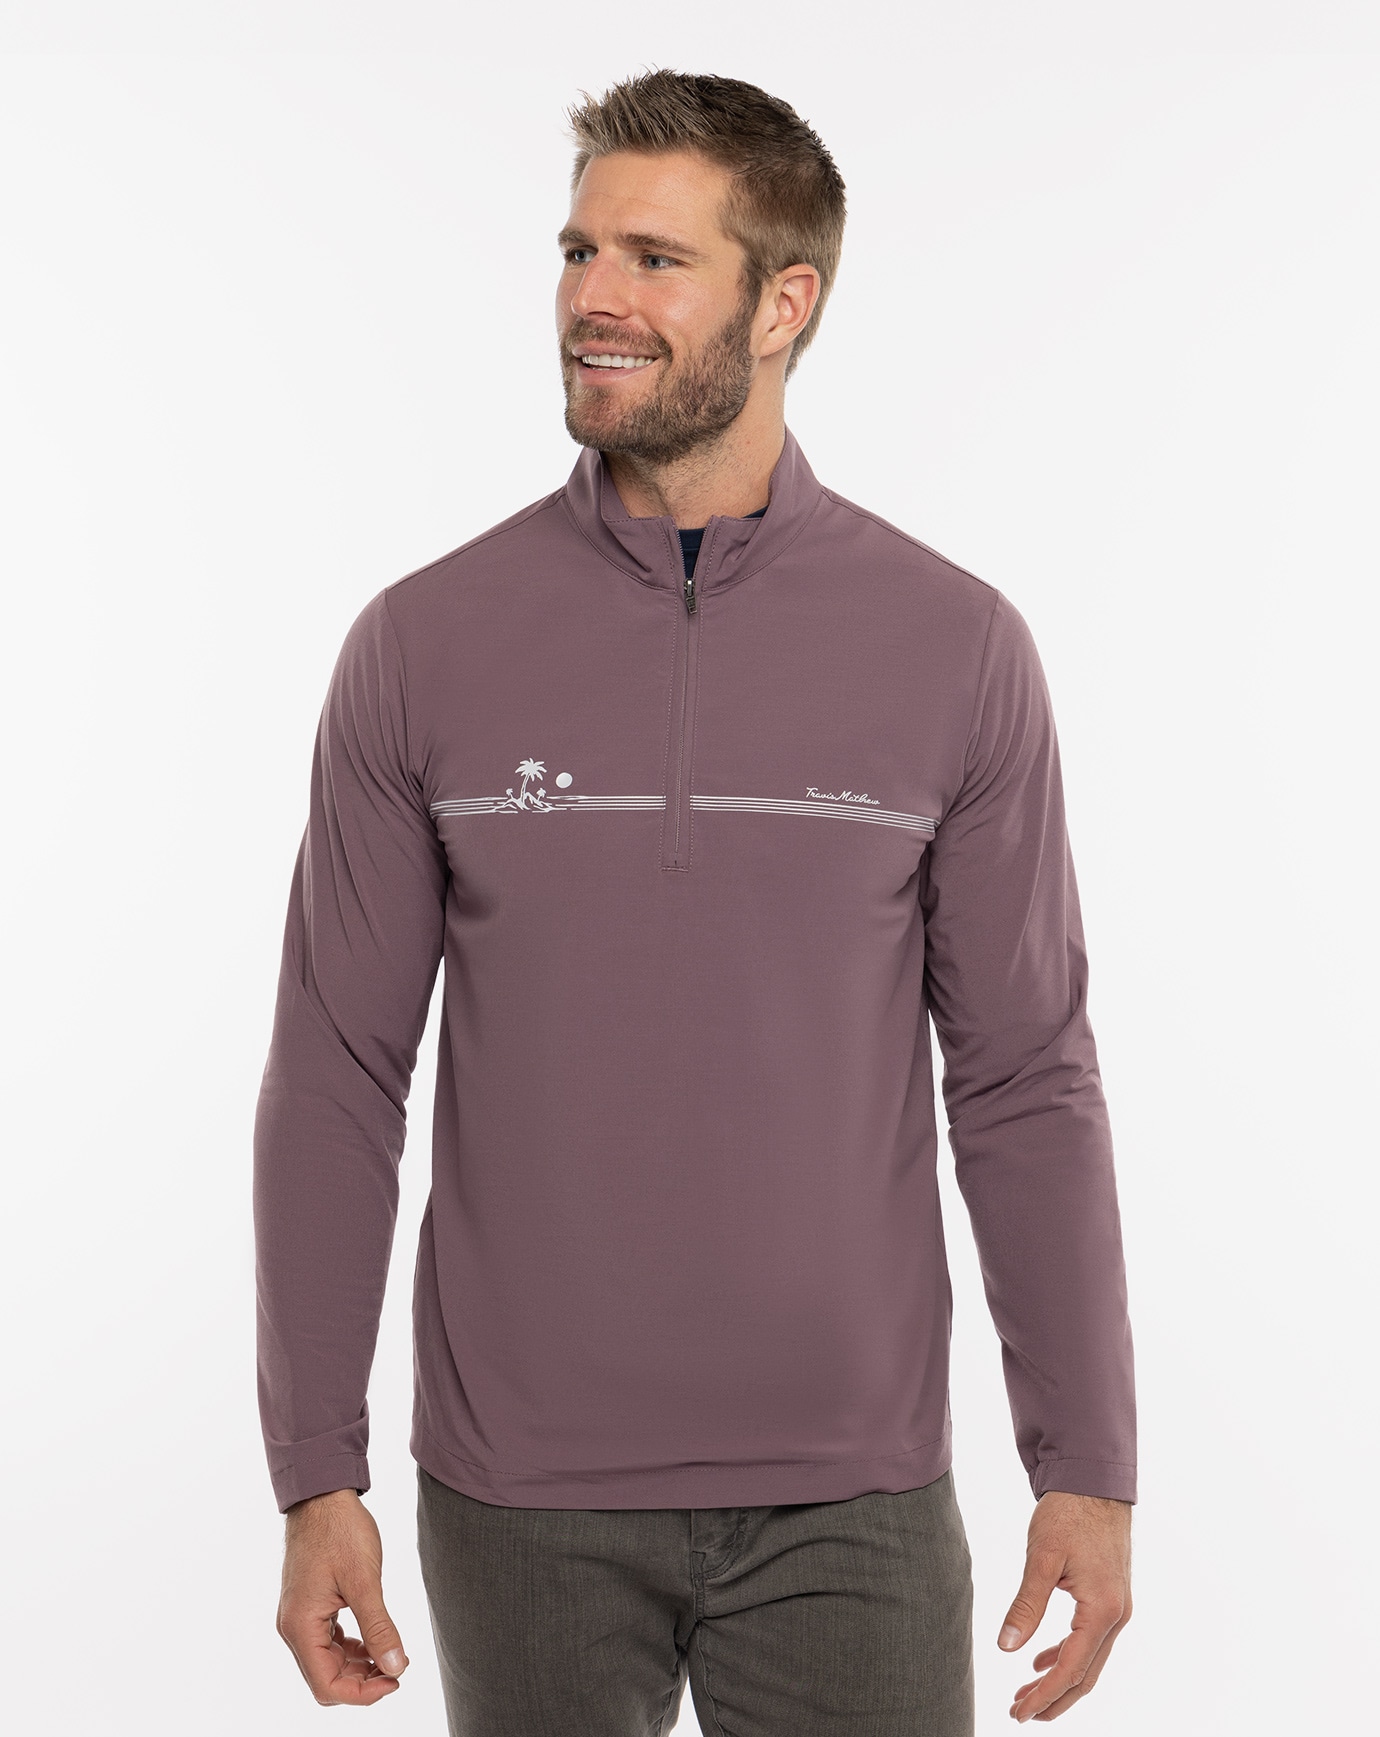 Travis Mathew Men's golf shirt Anaheim Ducks hockey logo embroidered sleeve  sz M